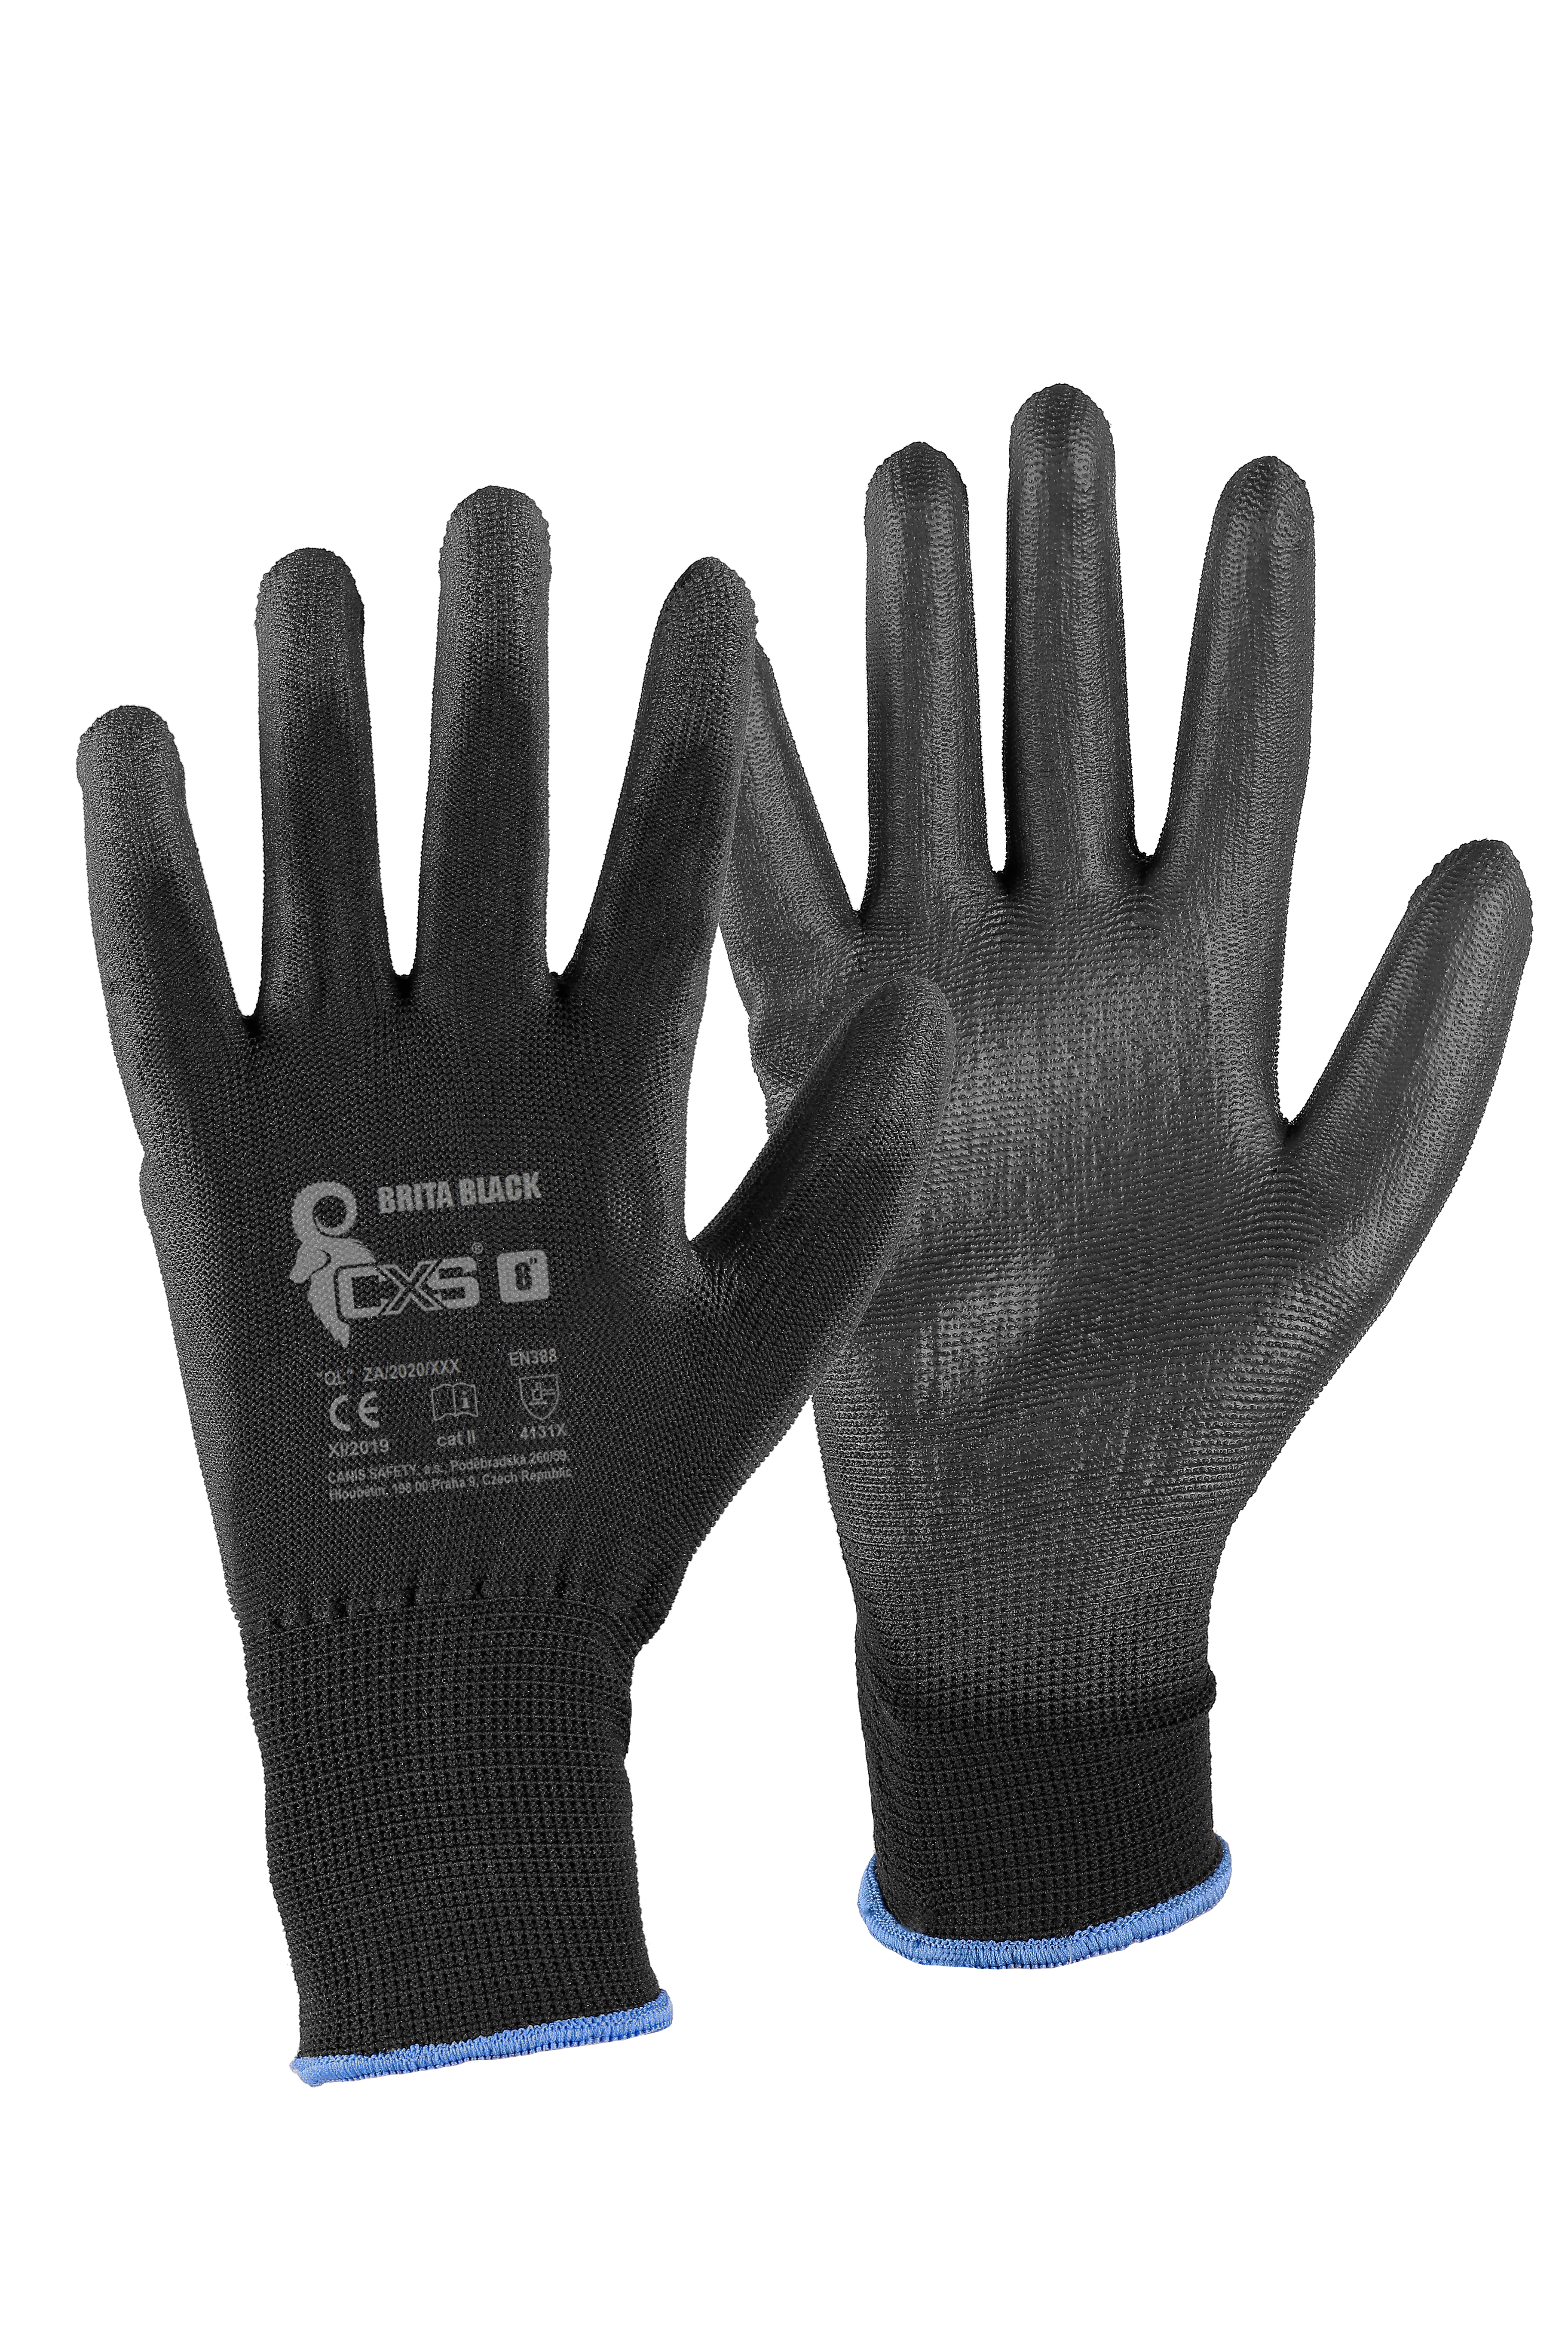 rukavice BRITA BLACK, s PU dlaní a úpletem, velikost 7 0.02 Kg TOP Sklad4 606046 148